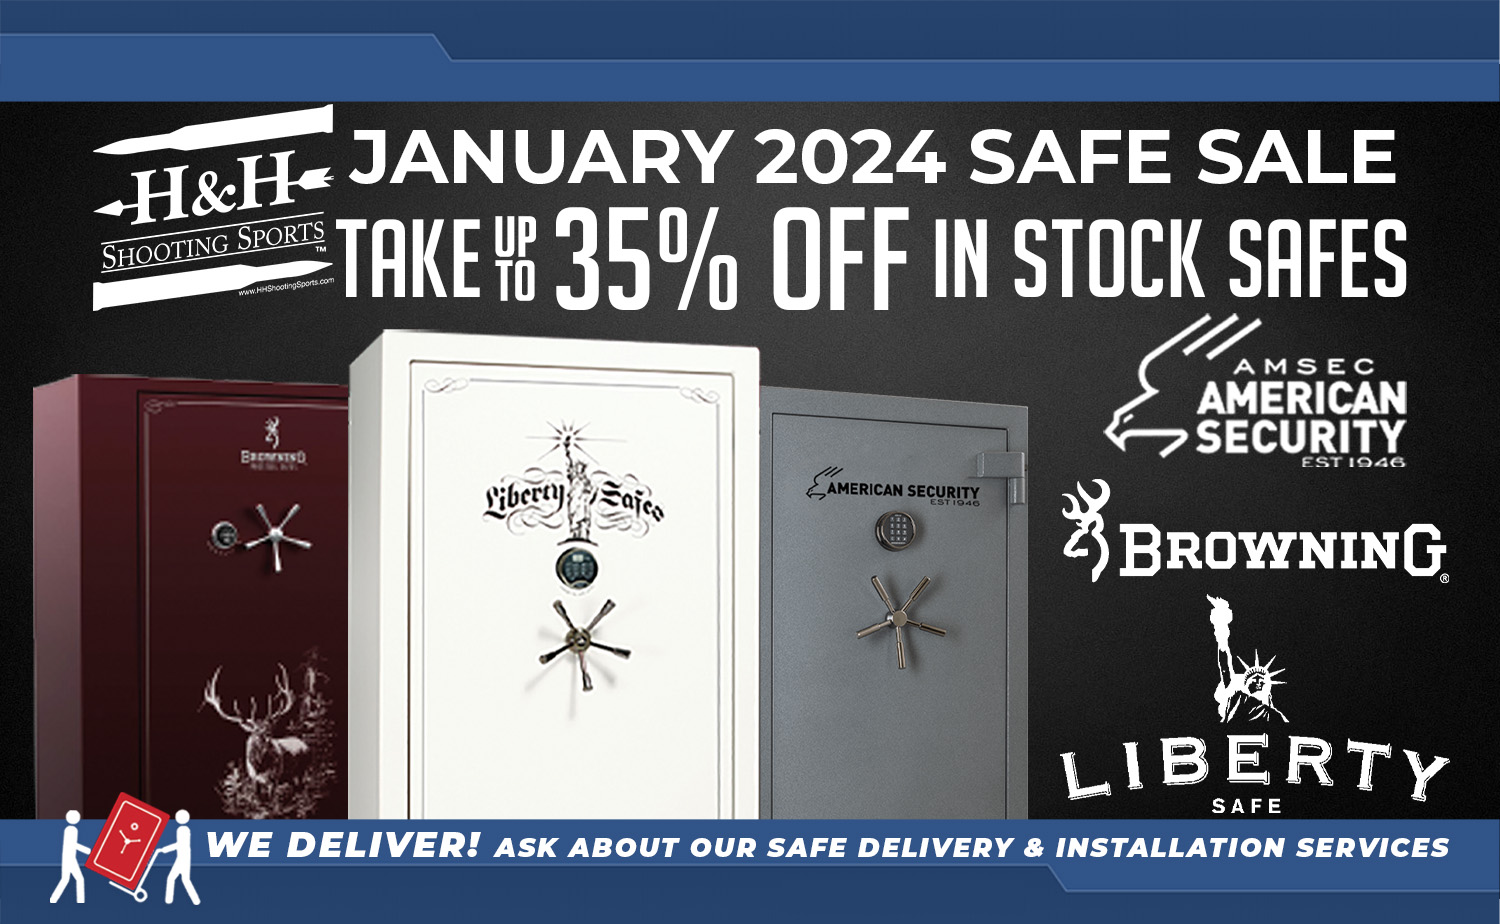 Safe January deal for H&H Shooting Goods Headline in OK